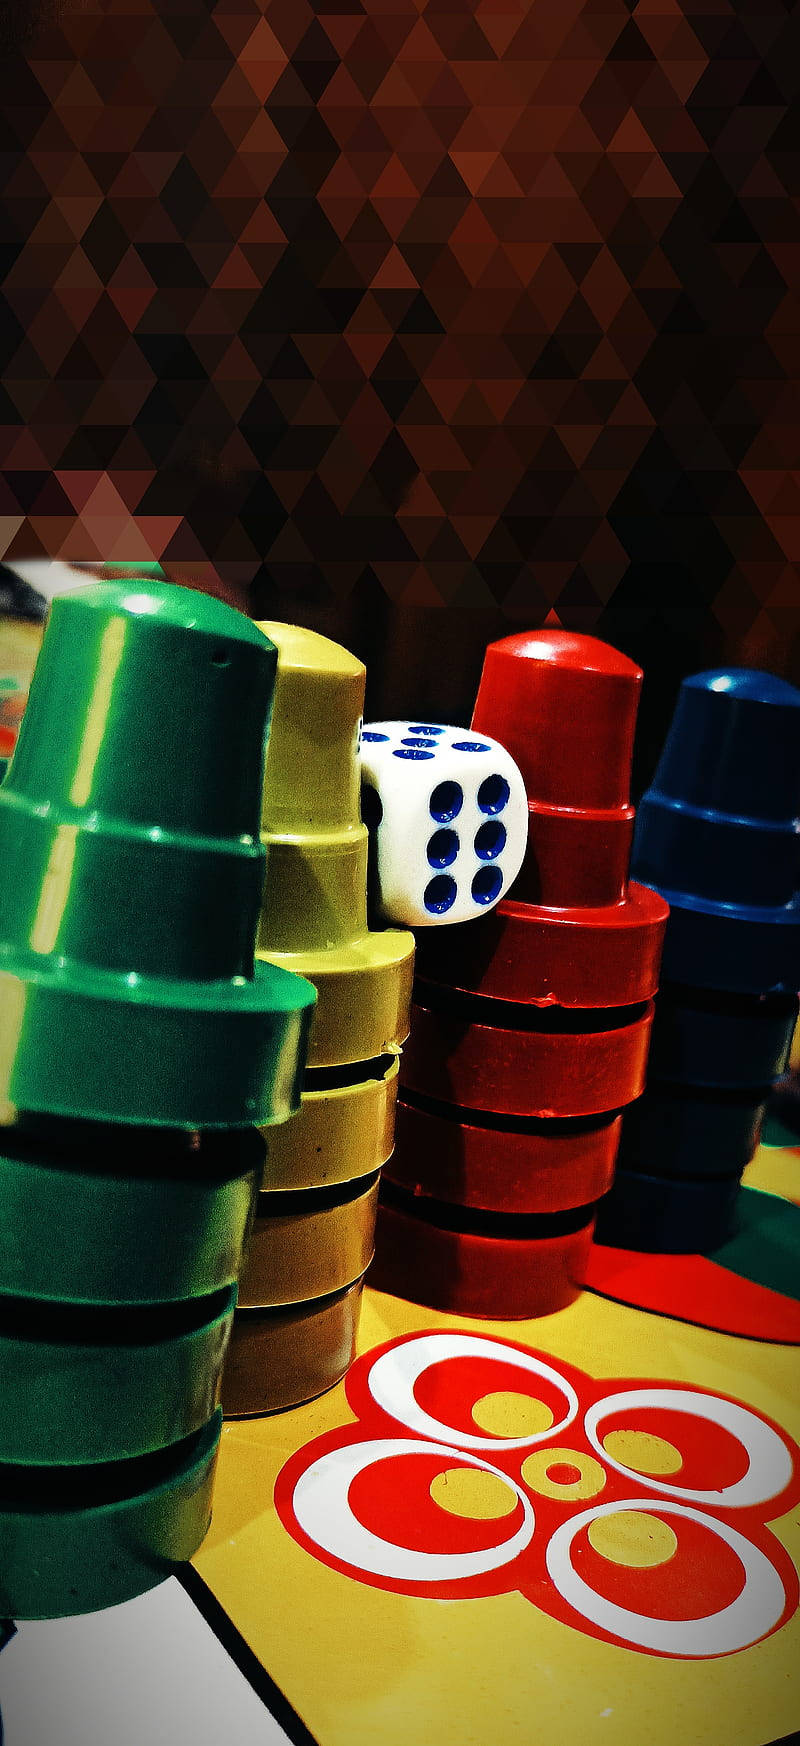 Gamble Playful Chance - Free photo on Pixabay - Pixabay